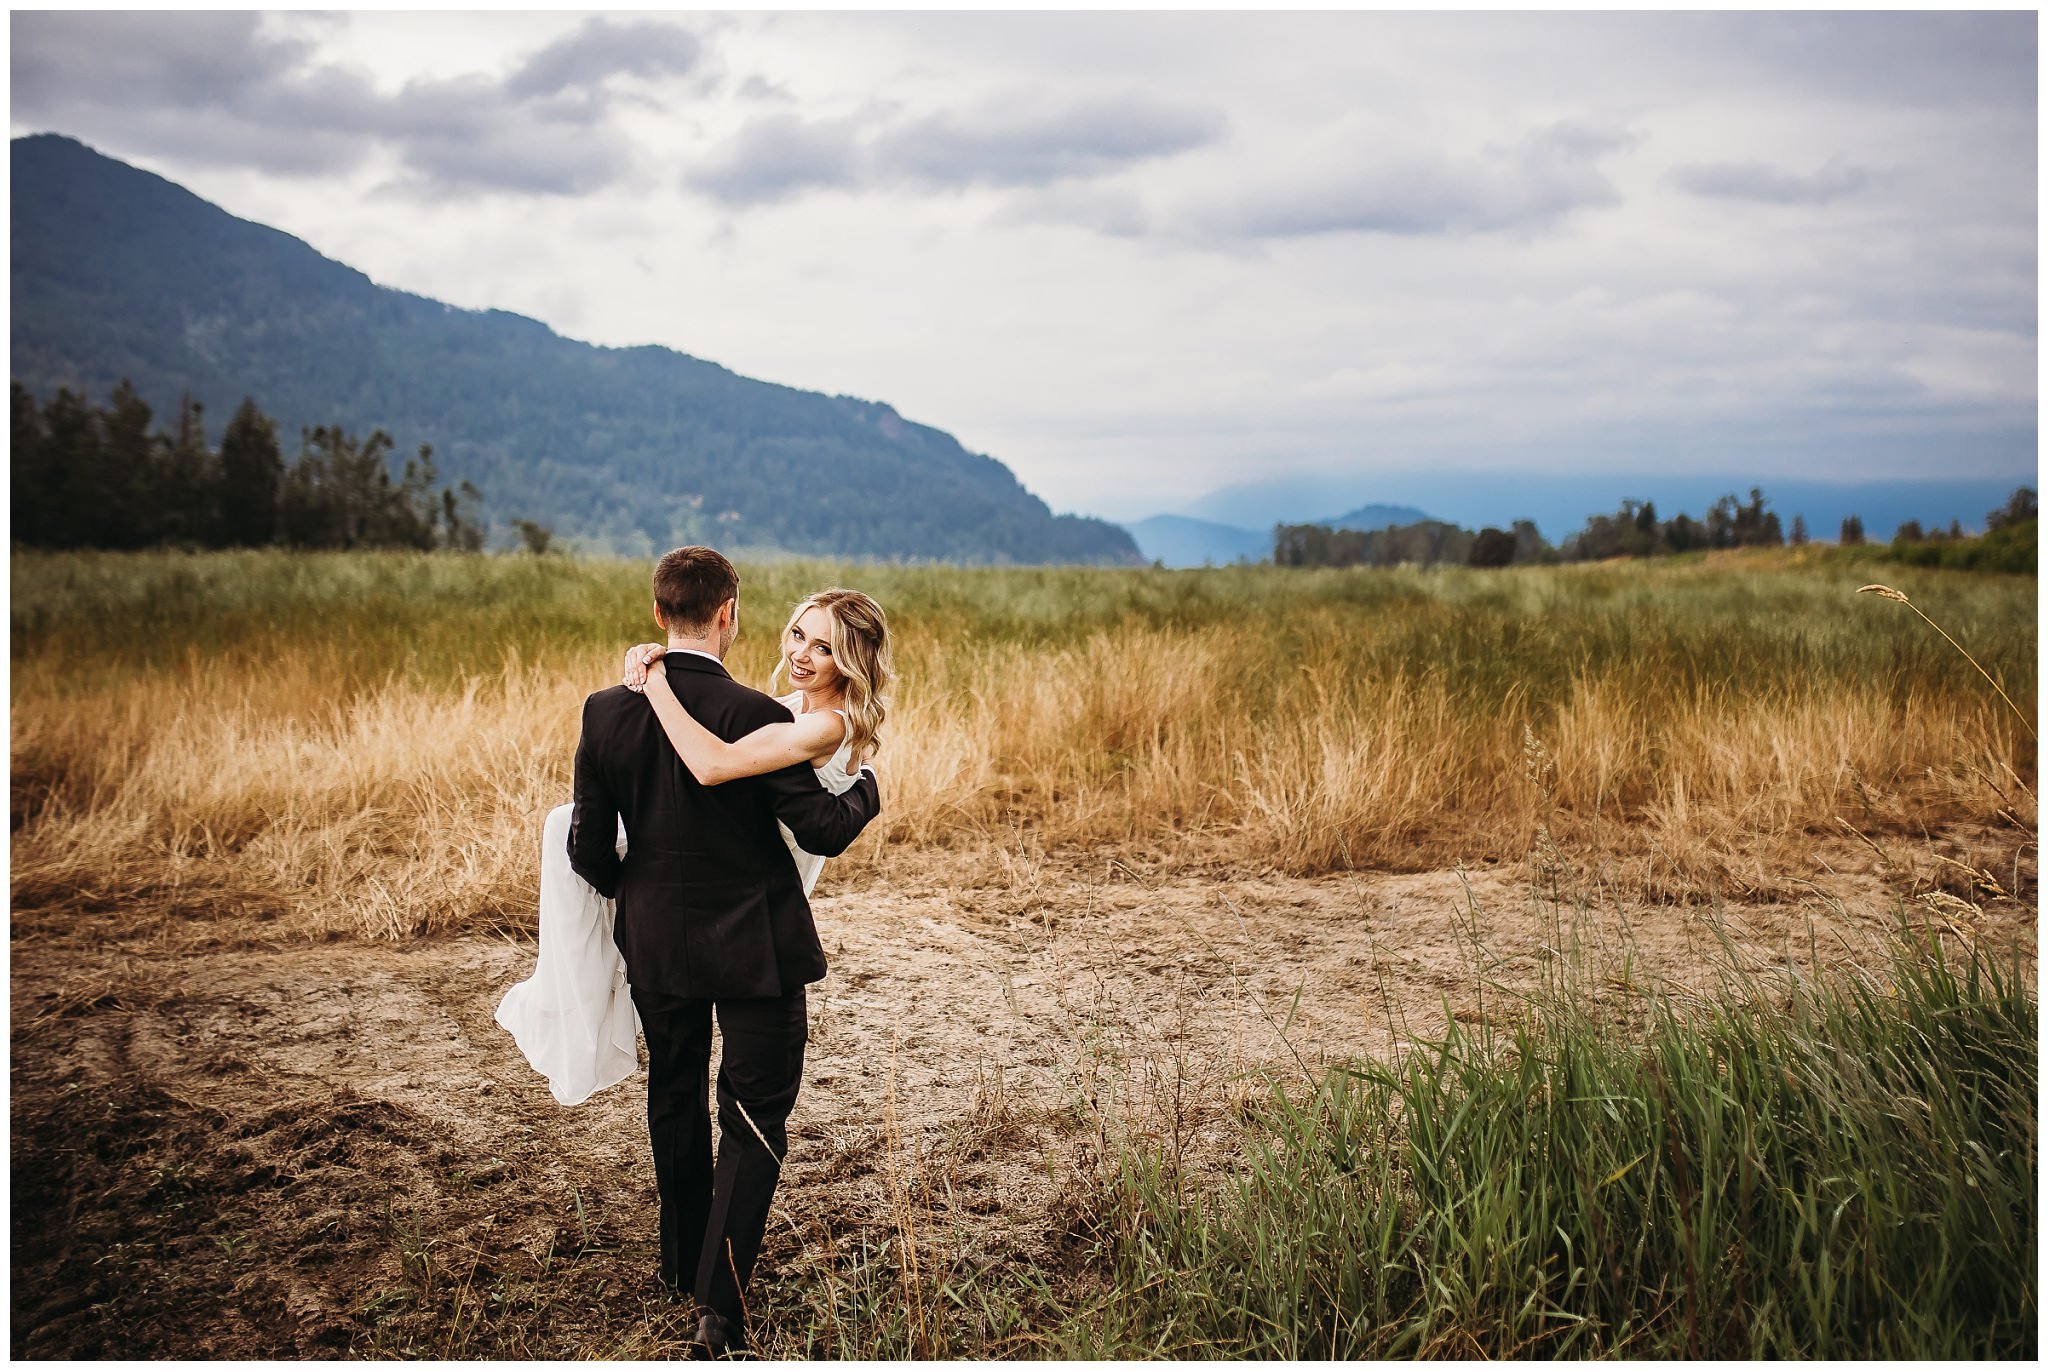 Best wedding photographer in the fraser valley 